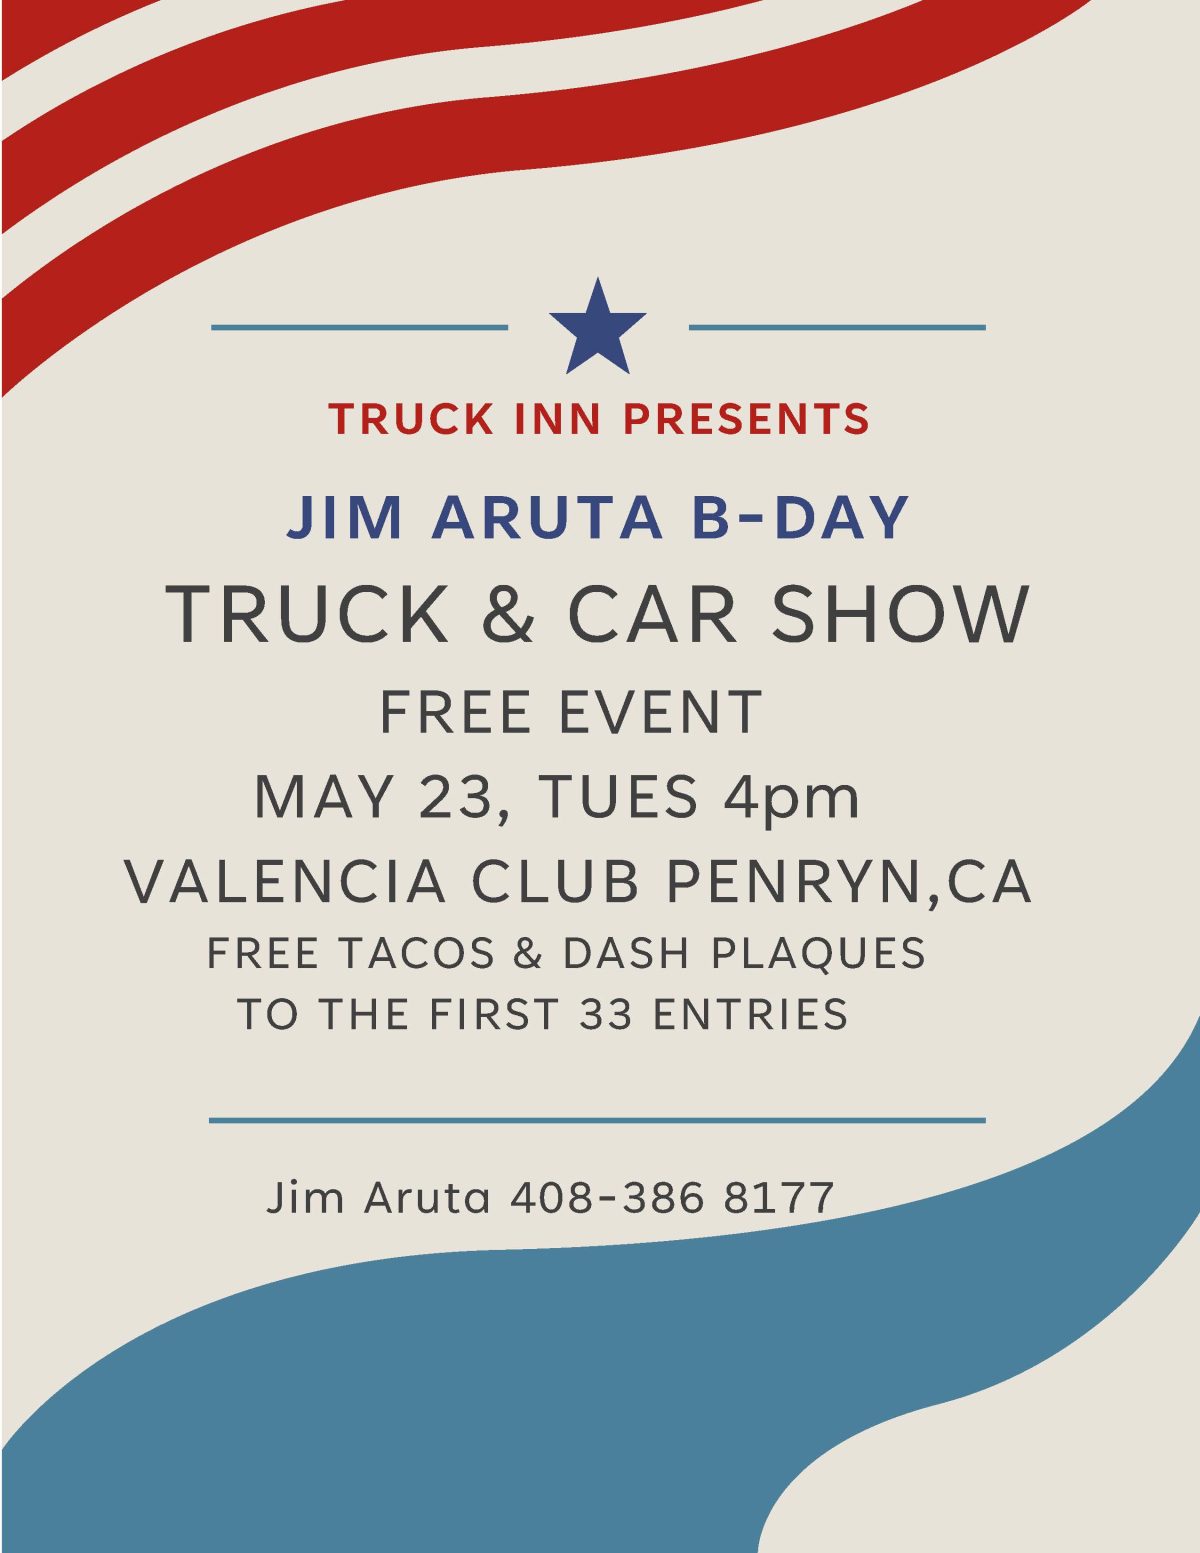 Jim Aruta’s Birthday Car Show